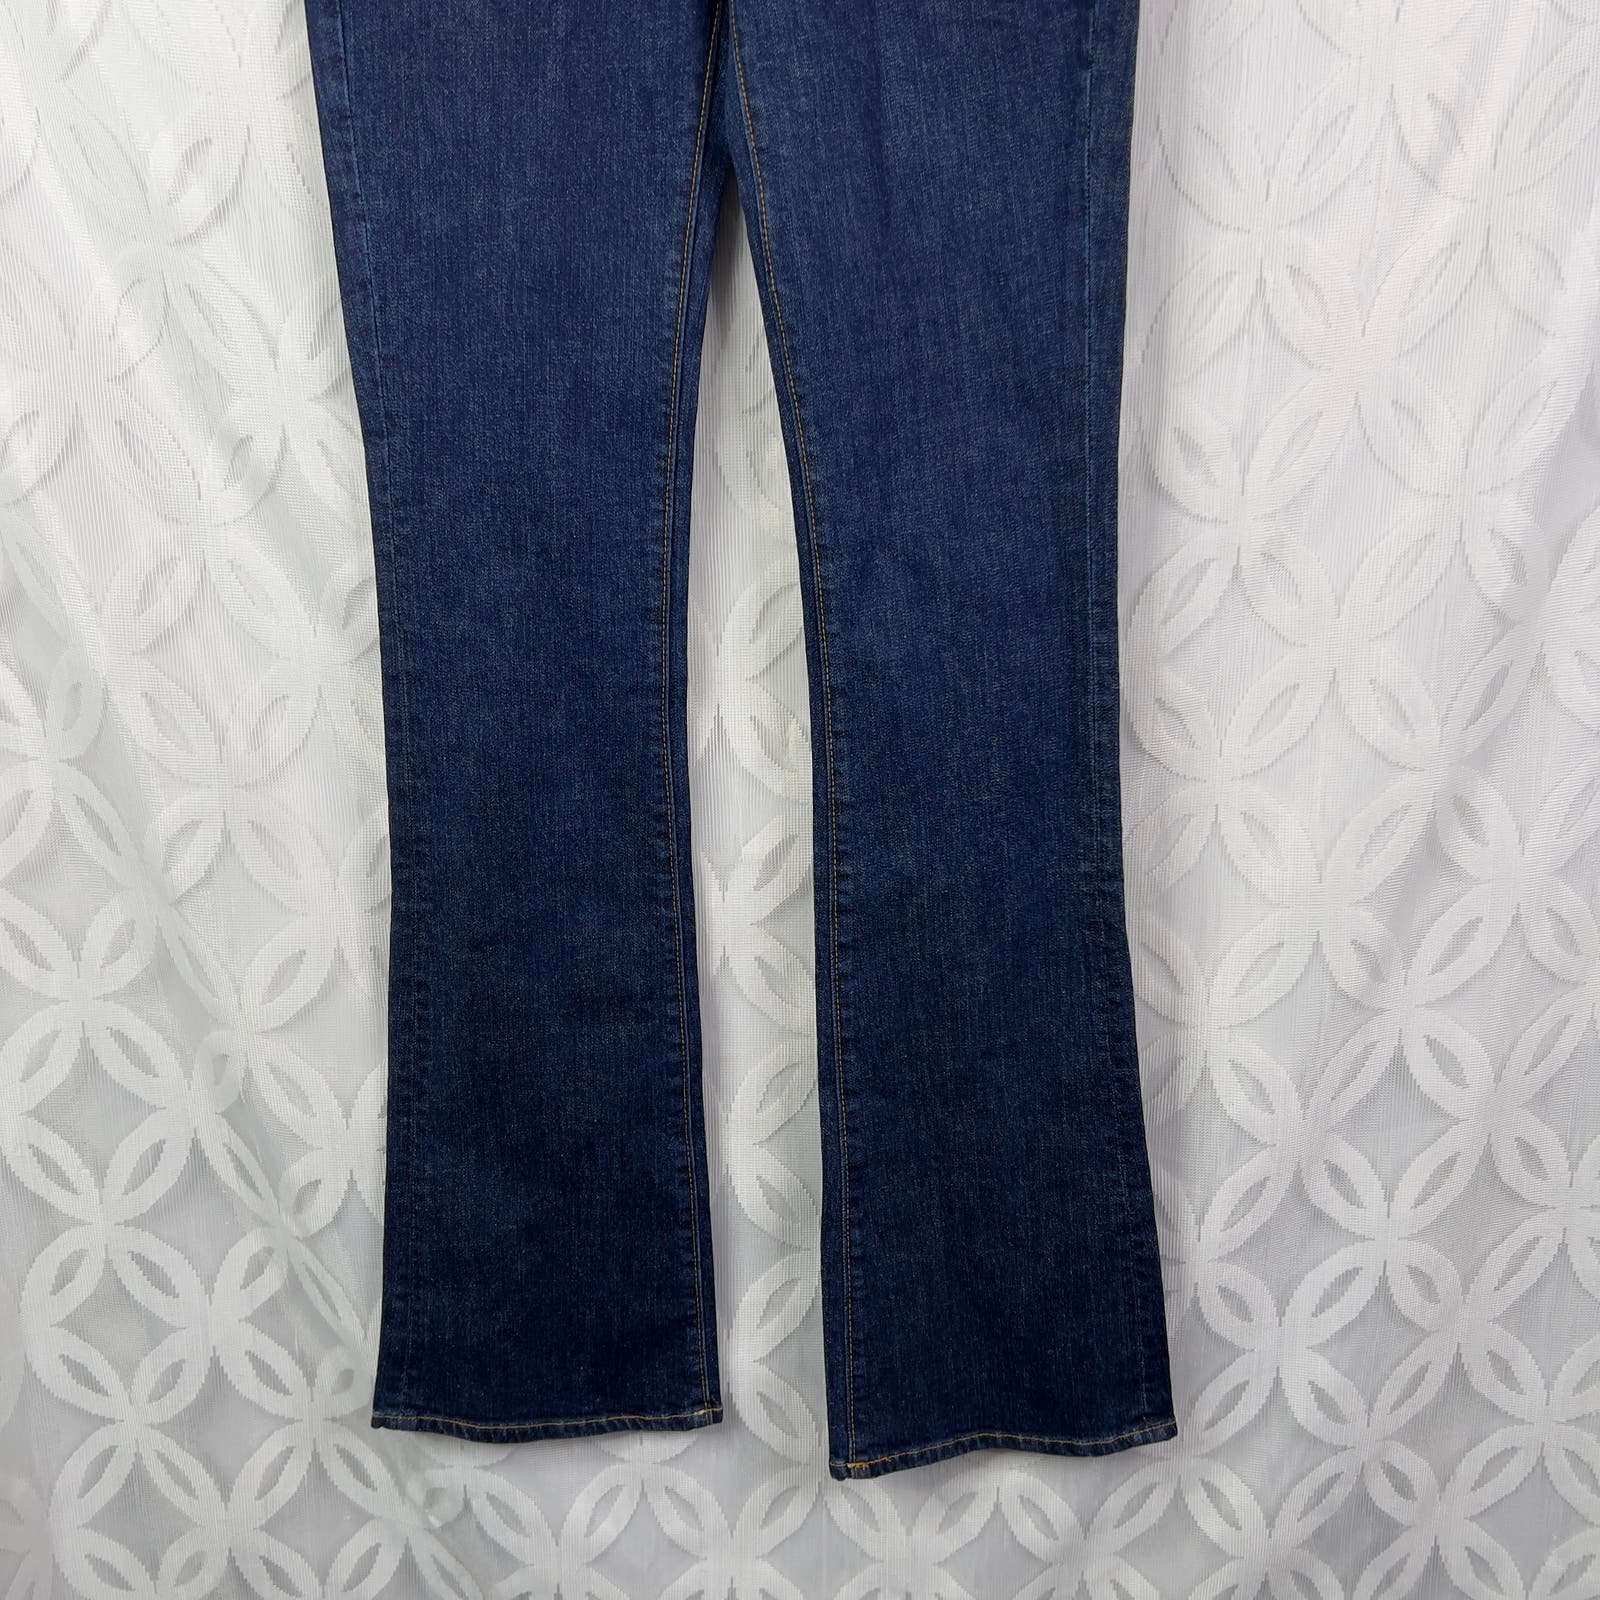 big discount Genetic Denim The Riley Mid Rise Boot Cut Jeans Sz. 28 NWOT $228 oG98M6eum just buy it